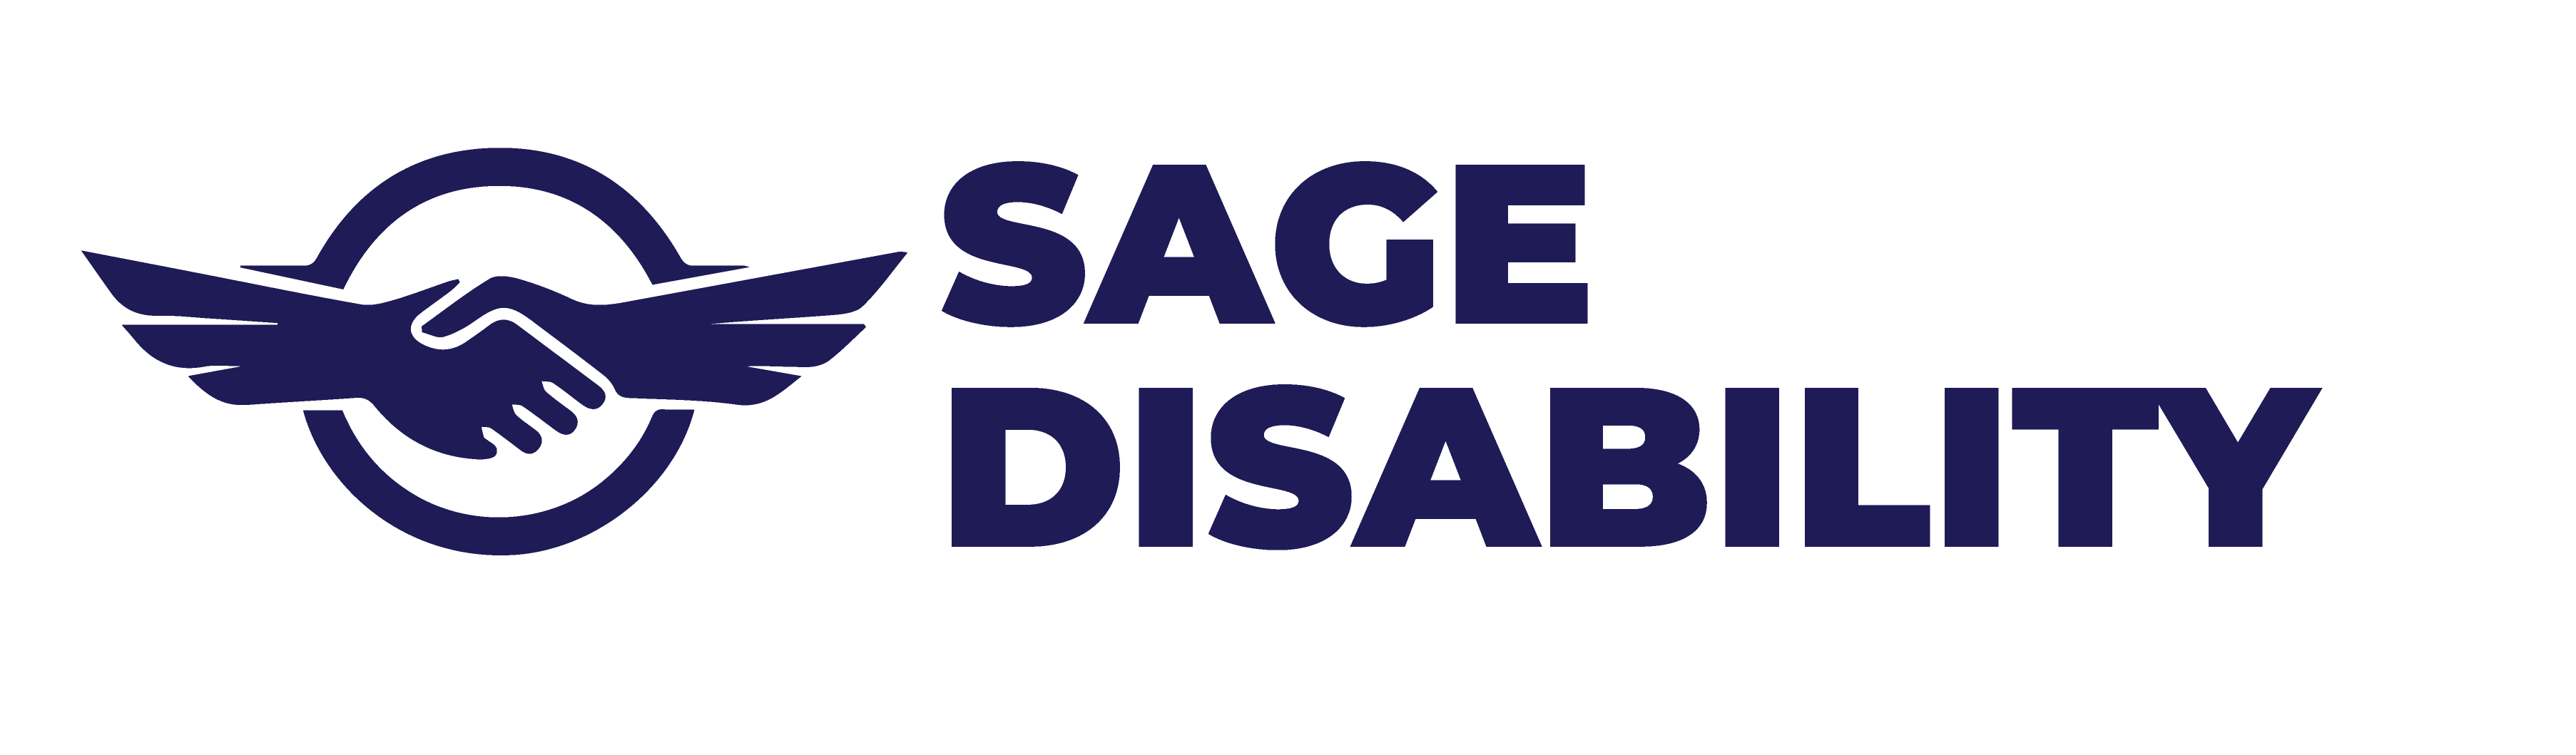 Sage Disability